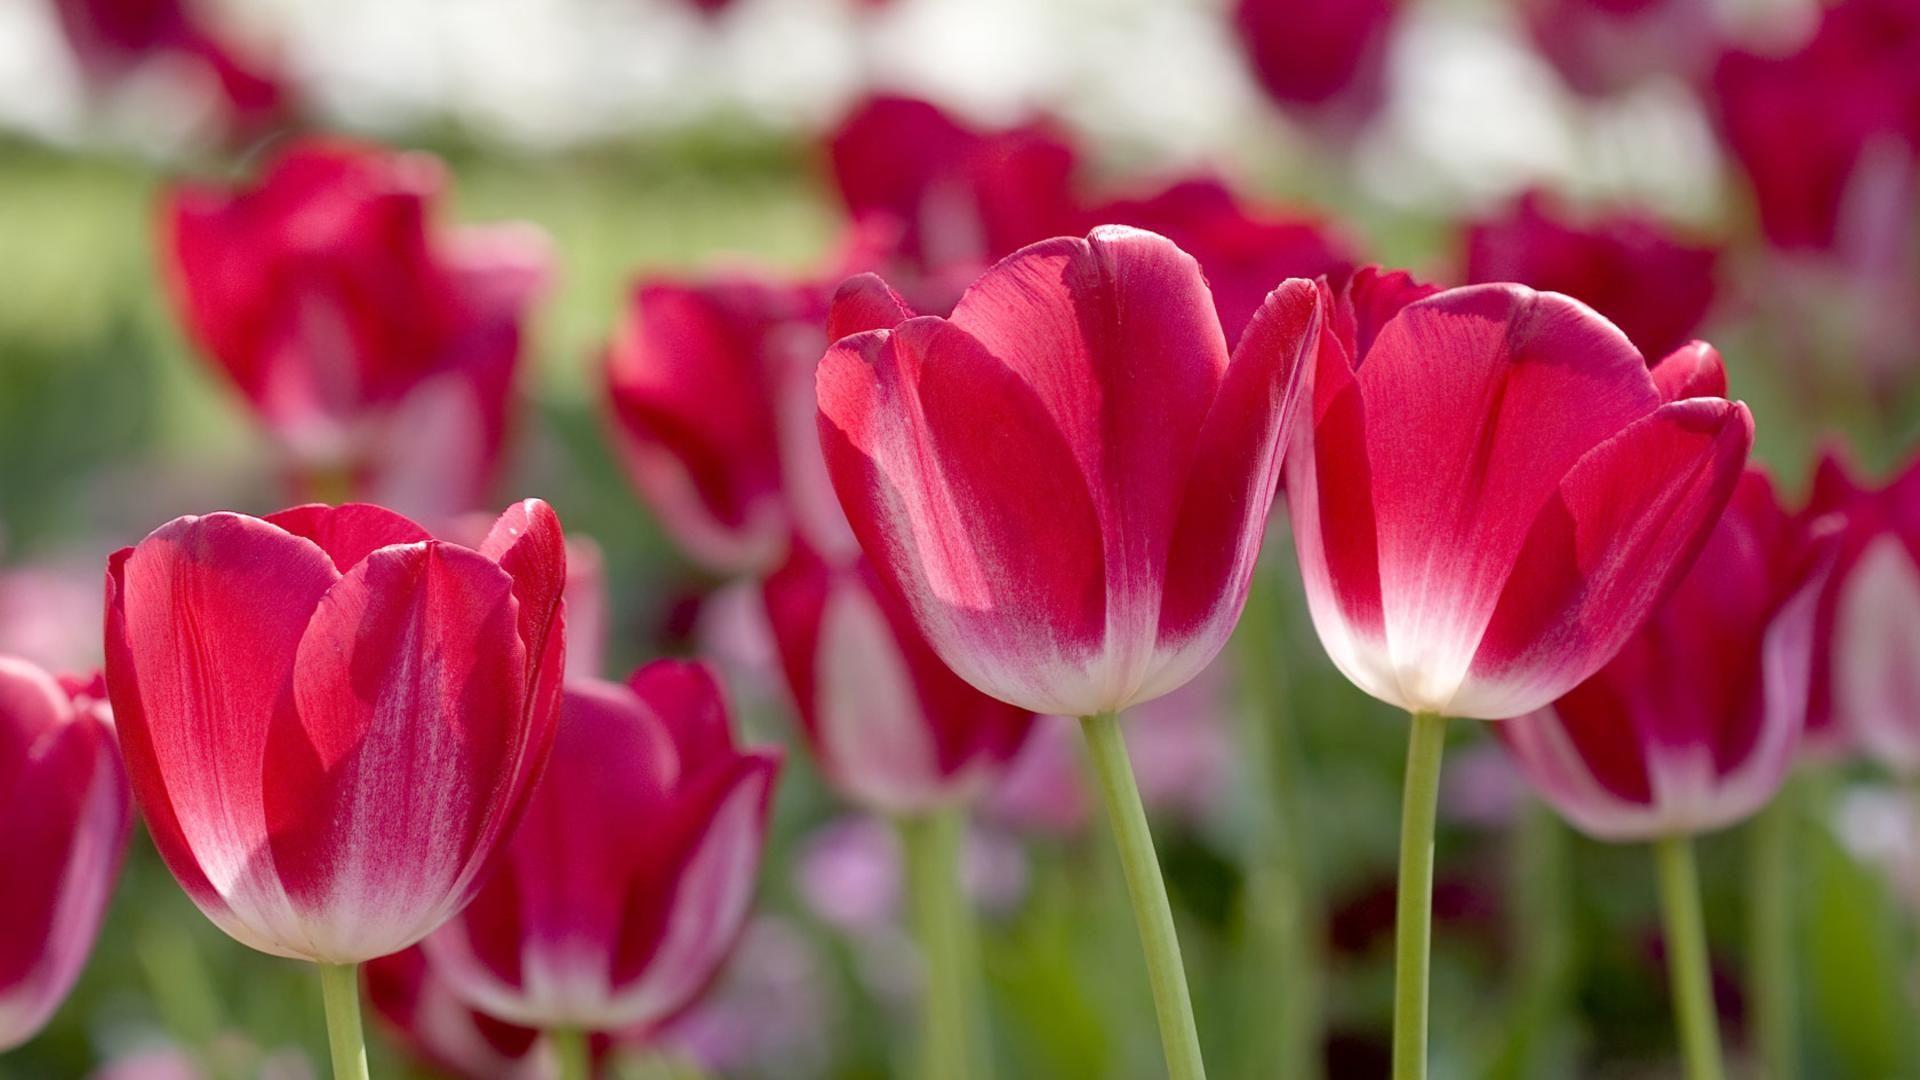 Red tulips spring flowering free desktop backgrounds